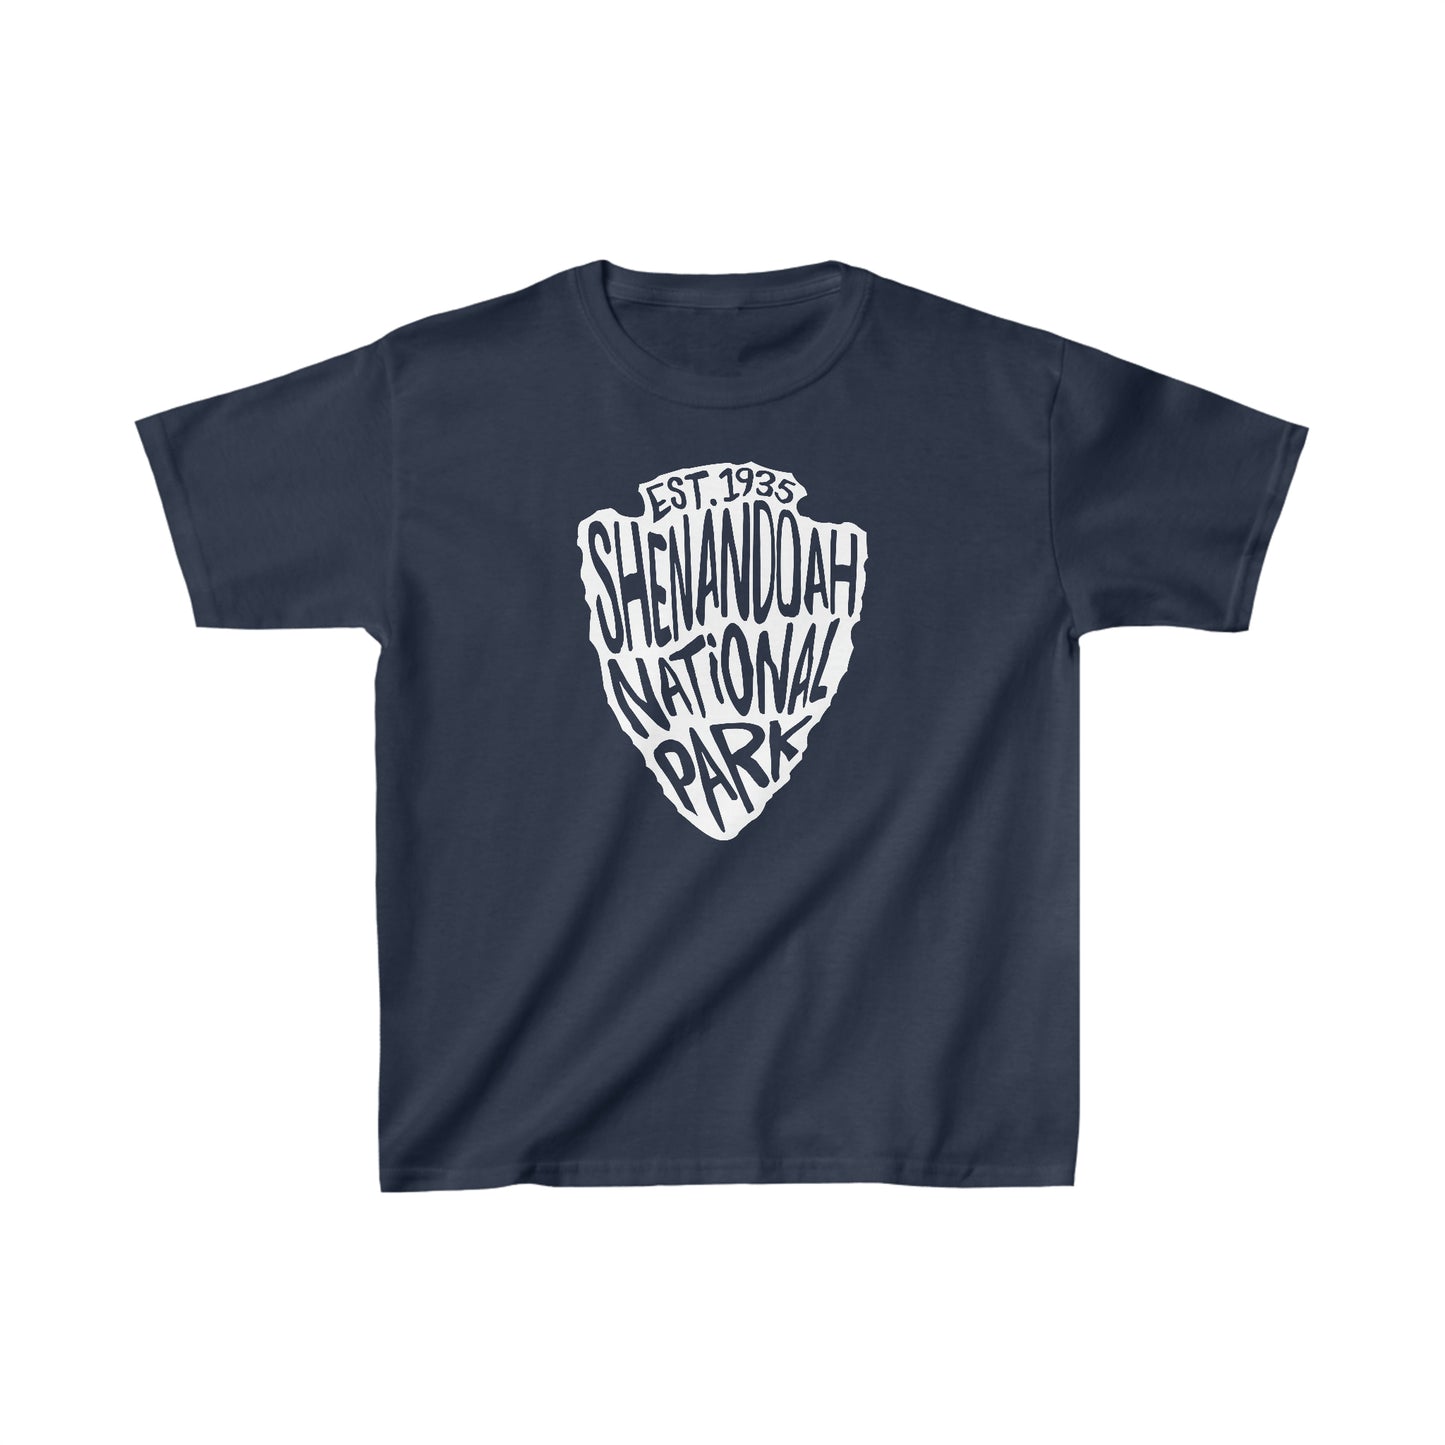 Shenandoah National Park Child T-Shirt - Arrowhead Design